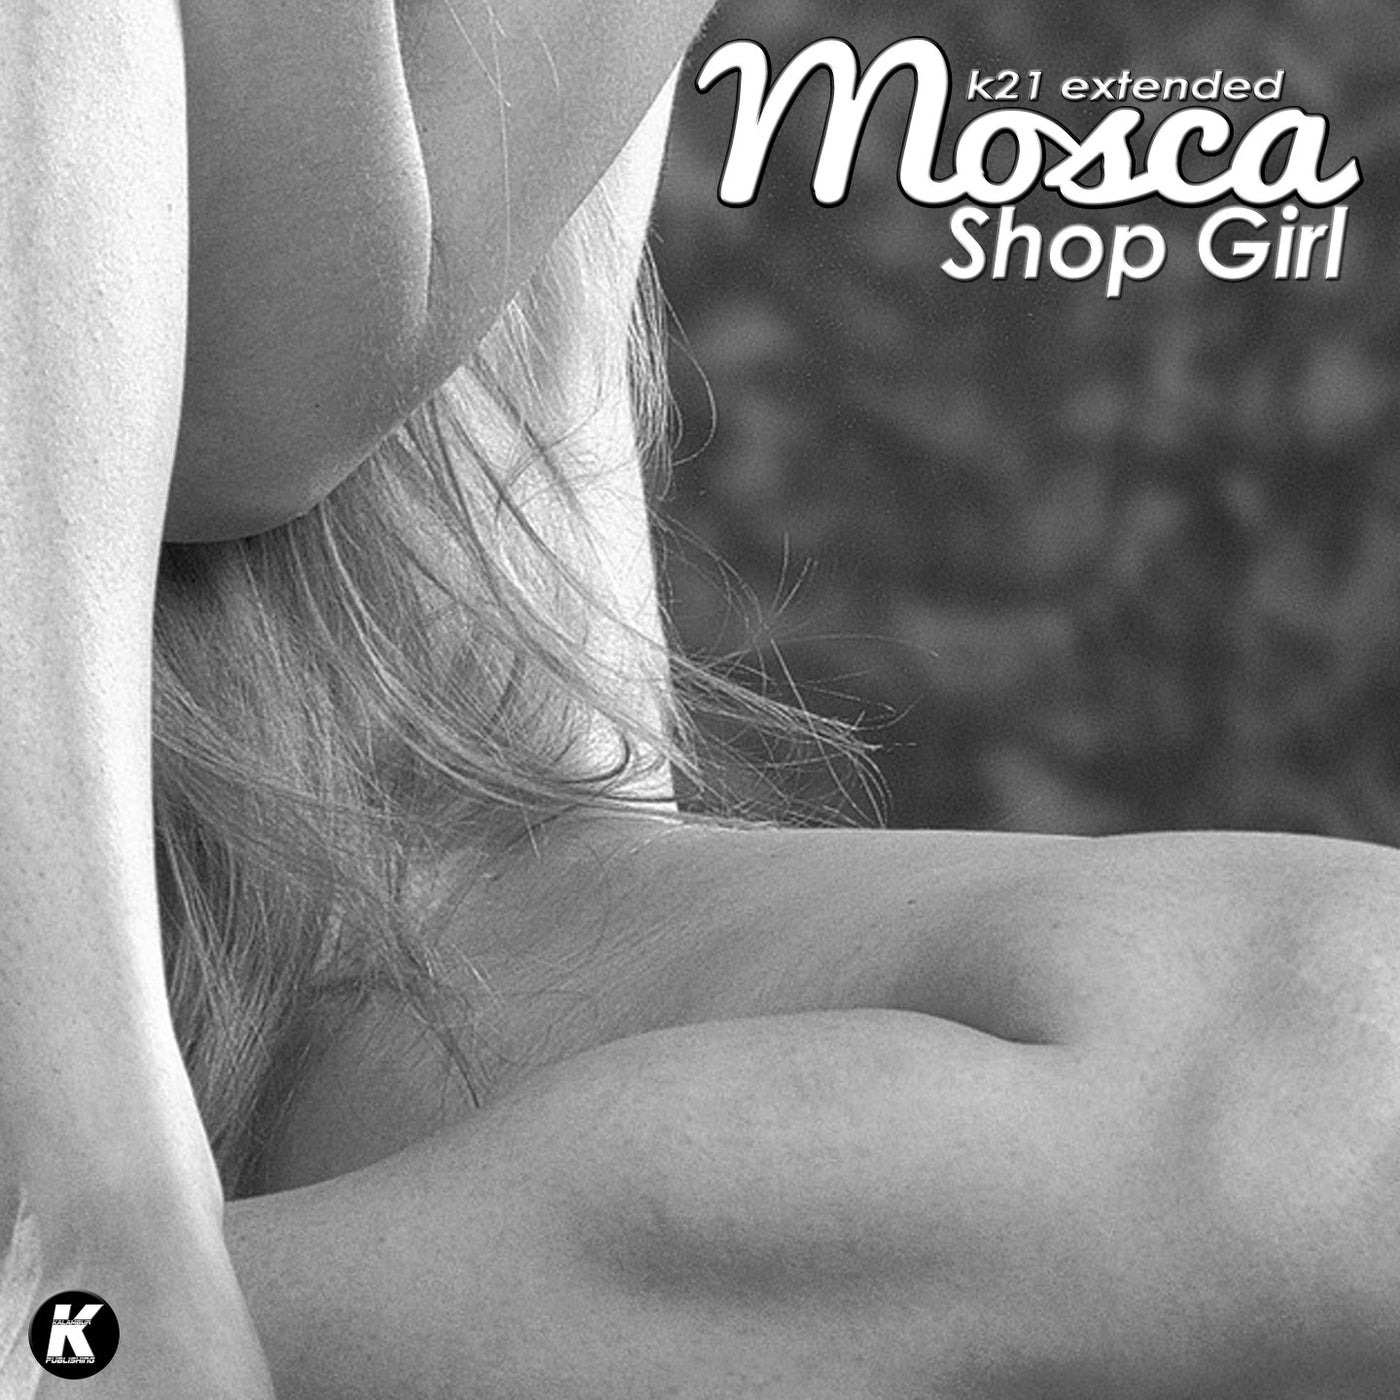 Shop Girl (K21extended version)